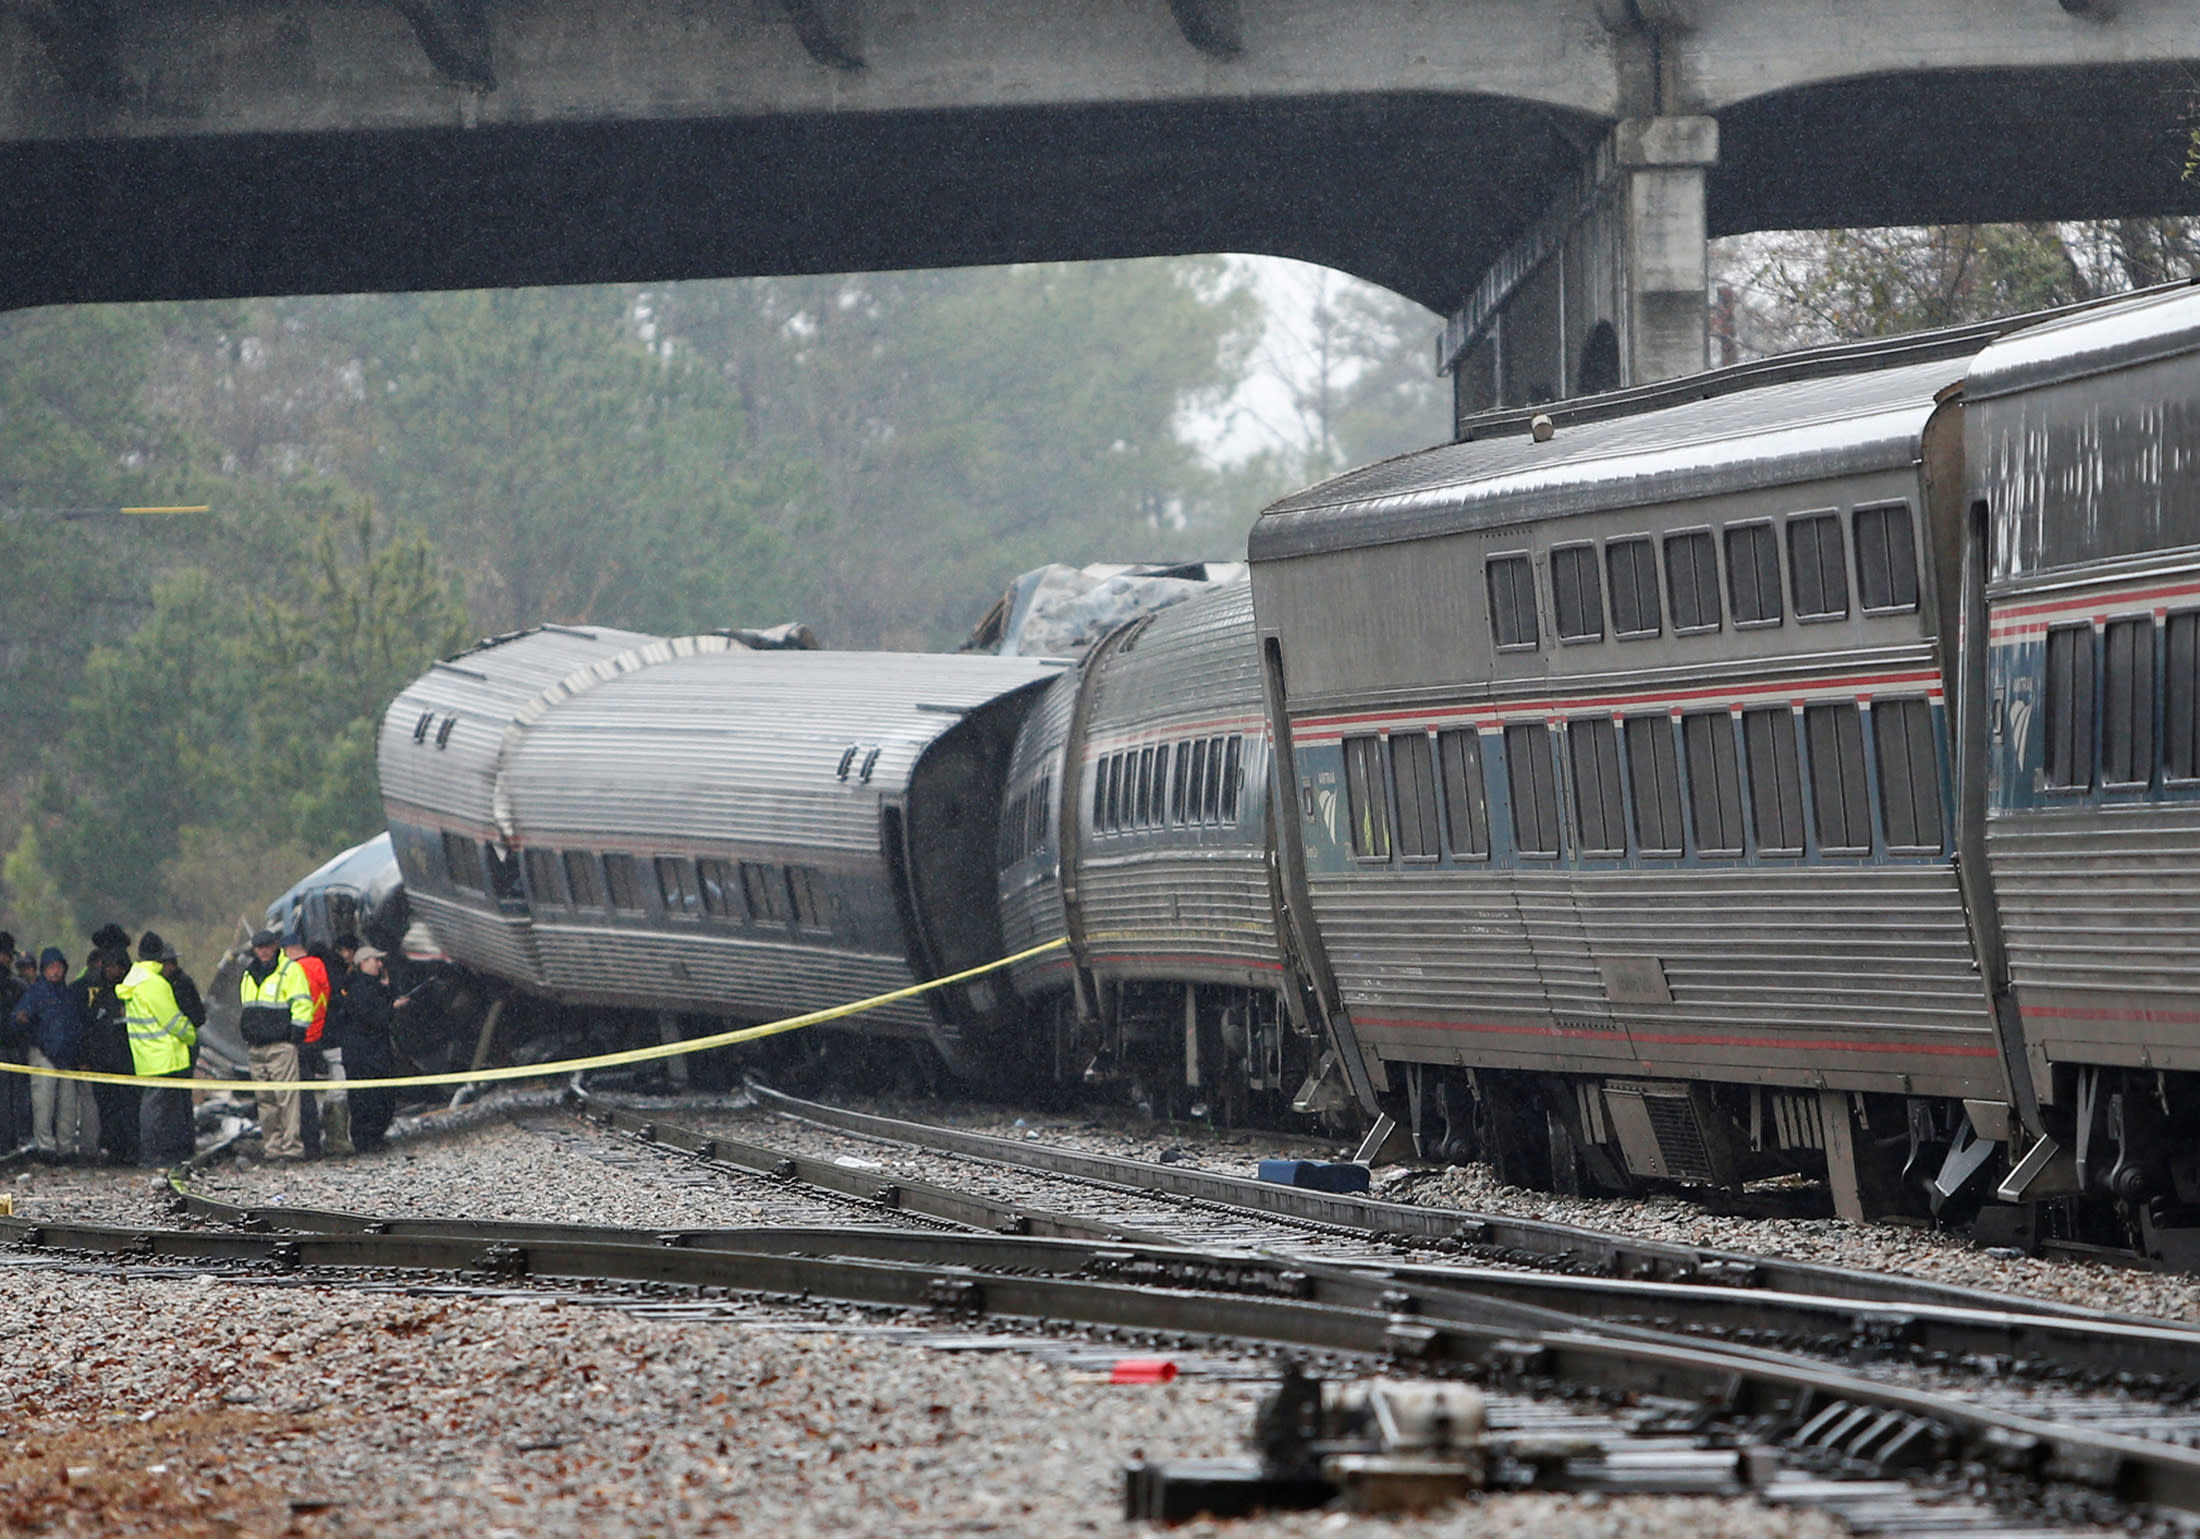 What caused the South Carolina train derailment?